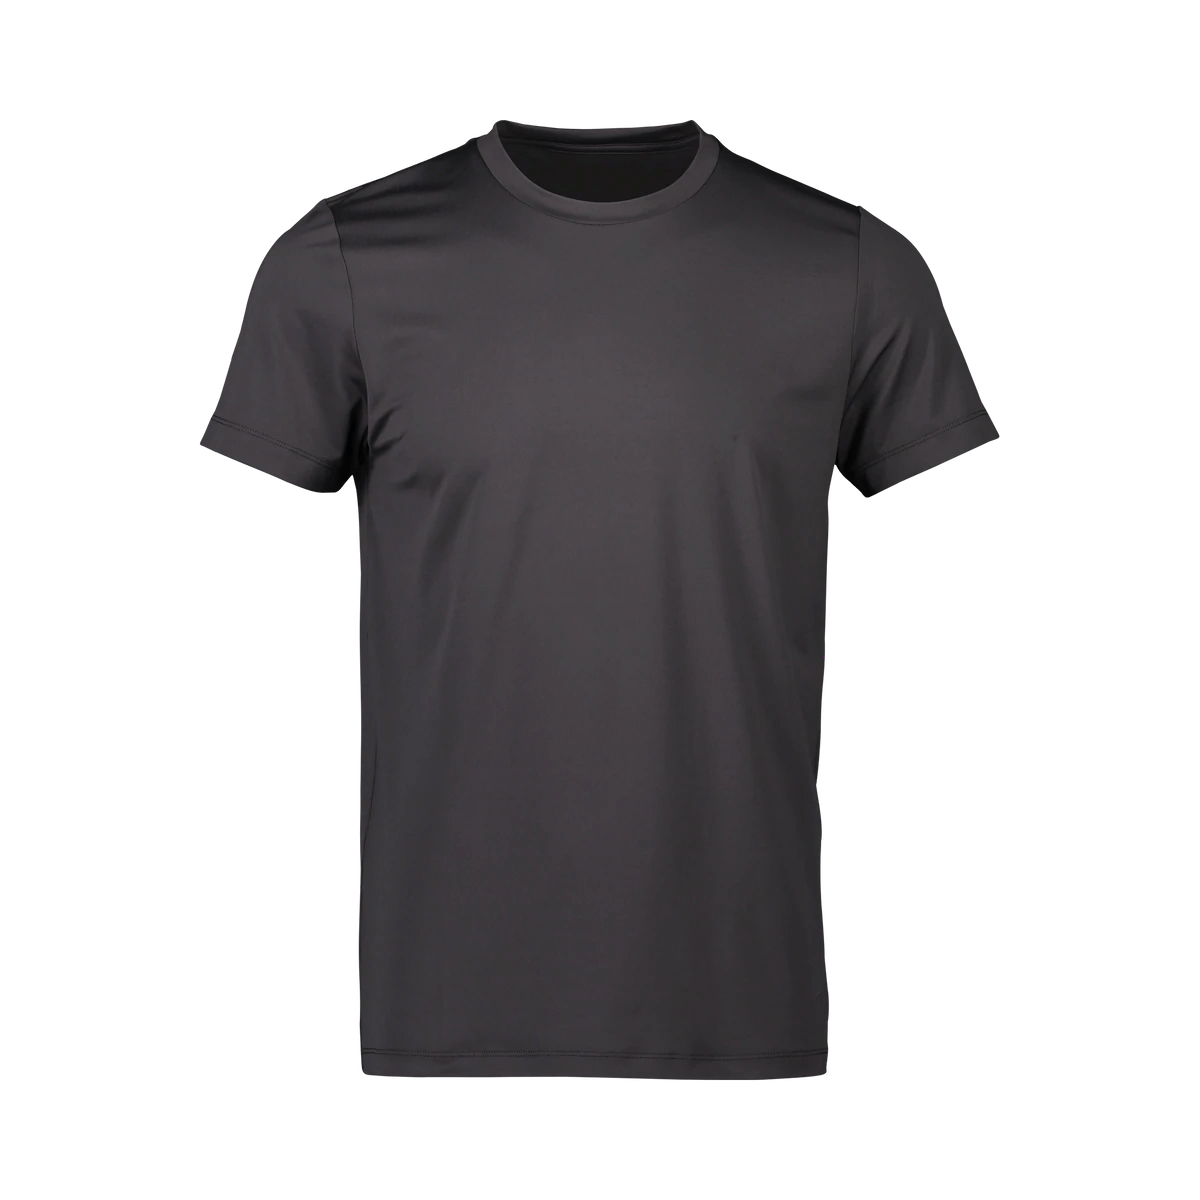 Tシャツ 52901-1043 エンデューロライトティー M's Reform Enduro Light Tee - Sylvanite Grey [メンズ]